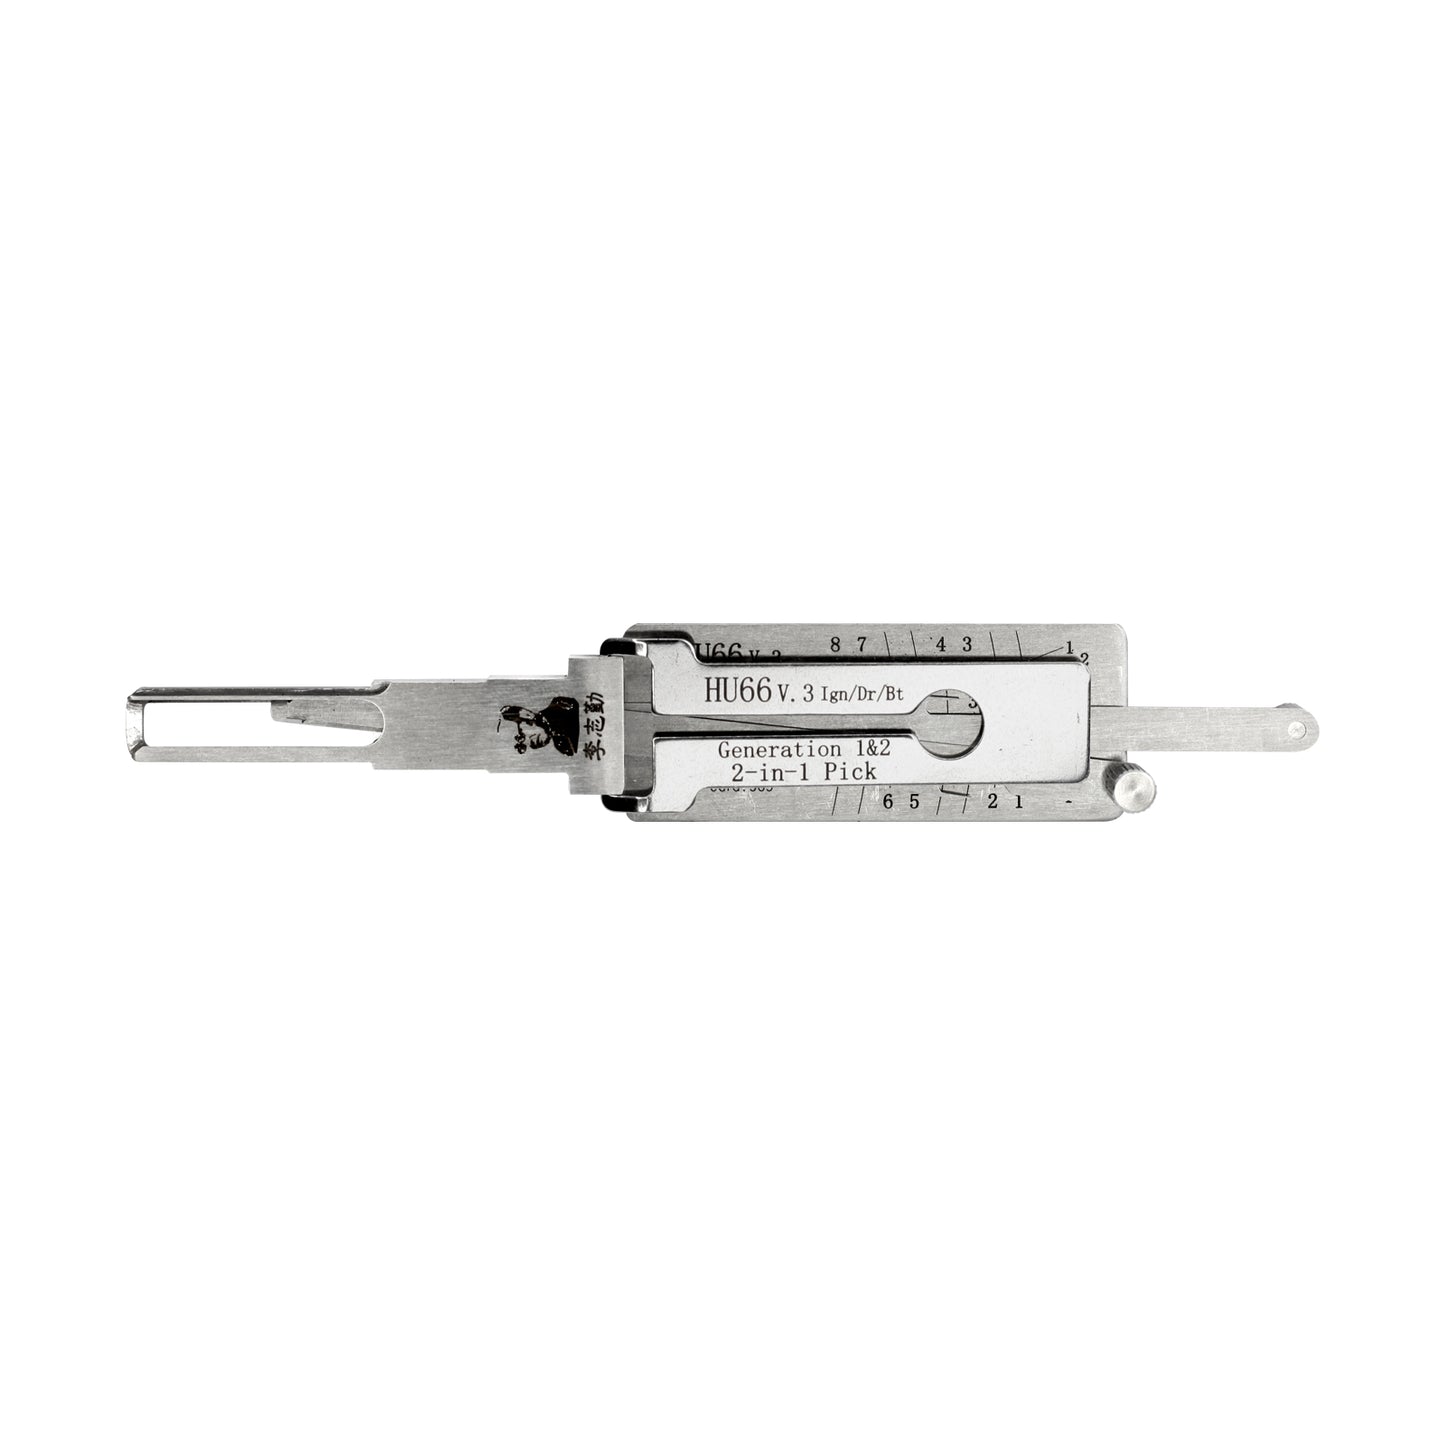 Original Auto Locksmith Tools door lishi 2-in-1Unlock ToolHigh Quality HU66 V.3 Ign/Dr/Bt